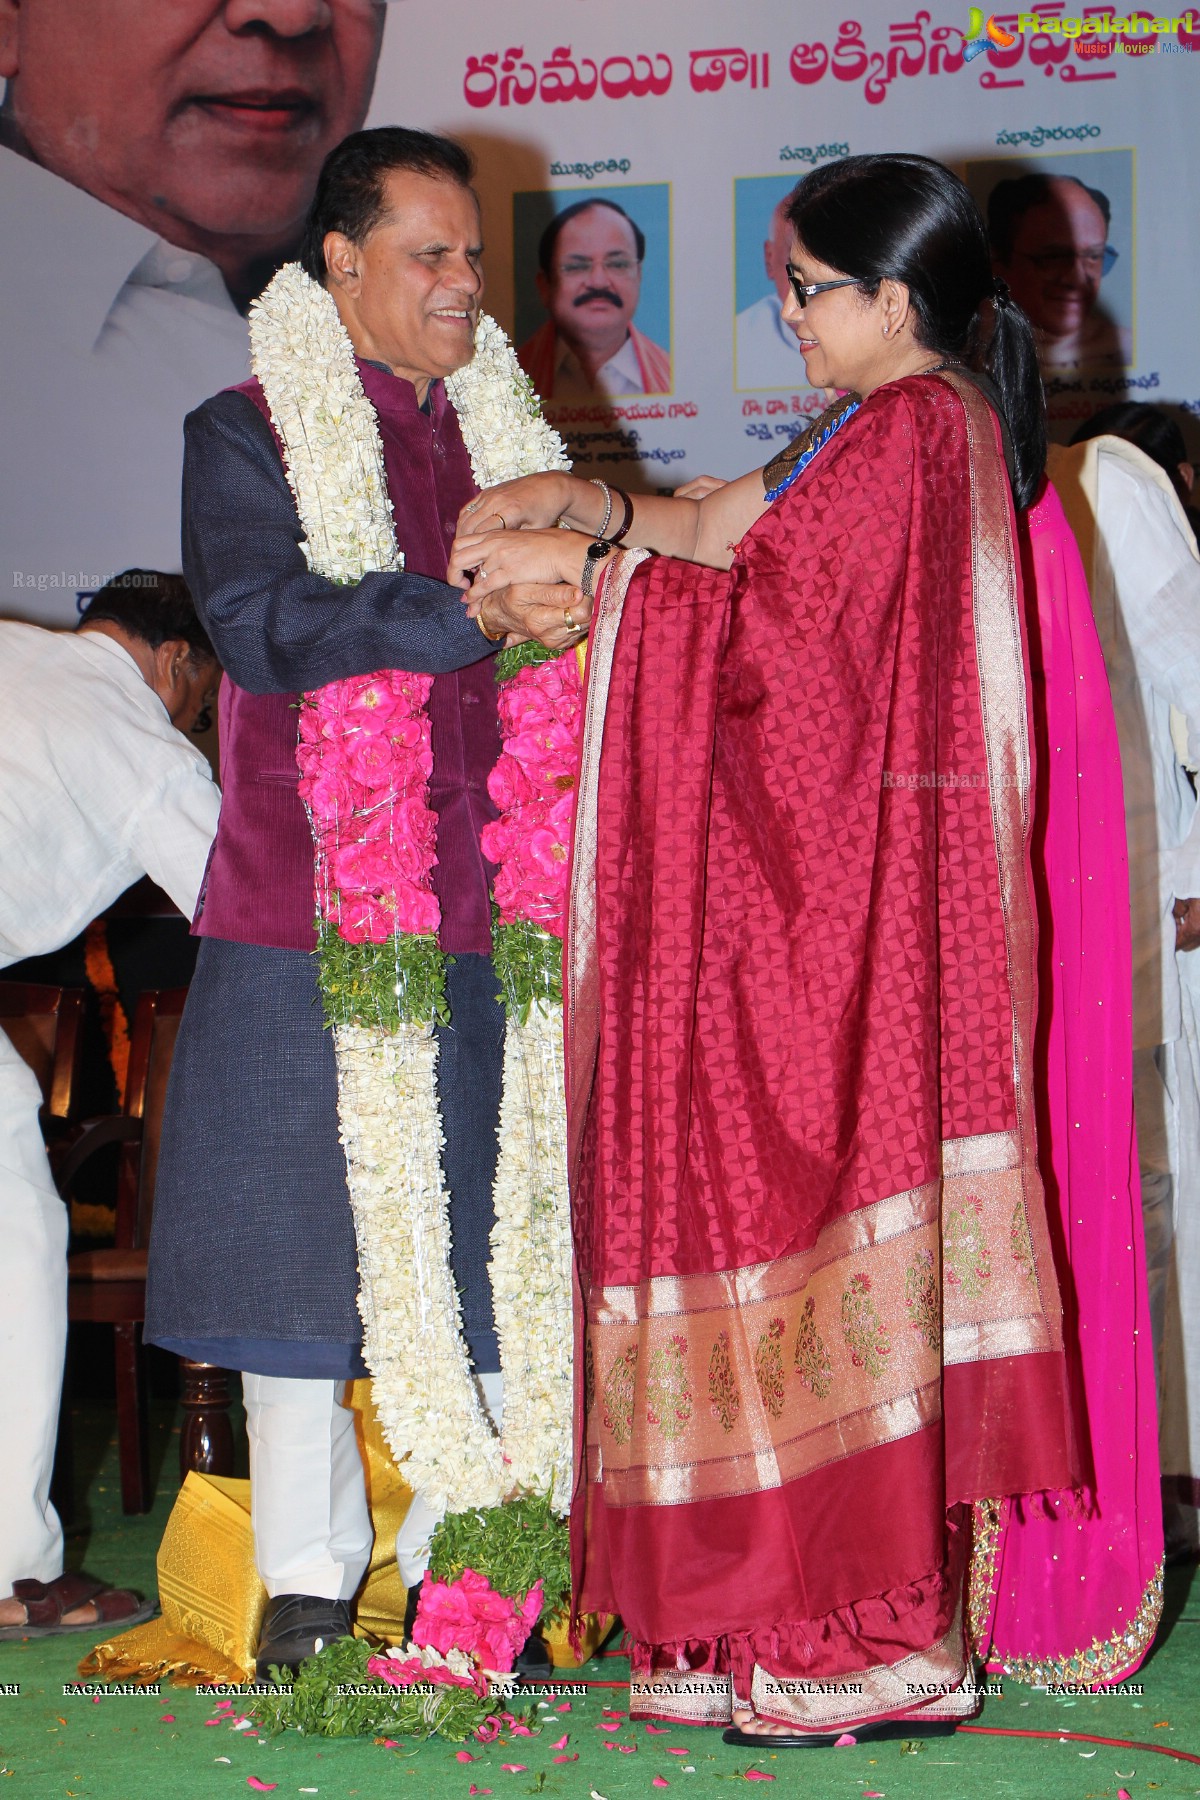 Akkineni Lifetime Achievement Award to Dr. T Subbarami Reddy at Ravindra Bharati